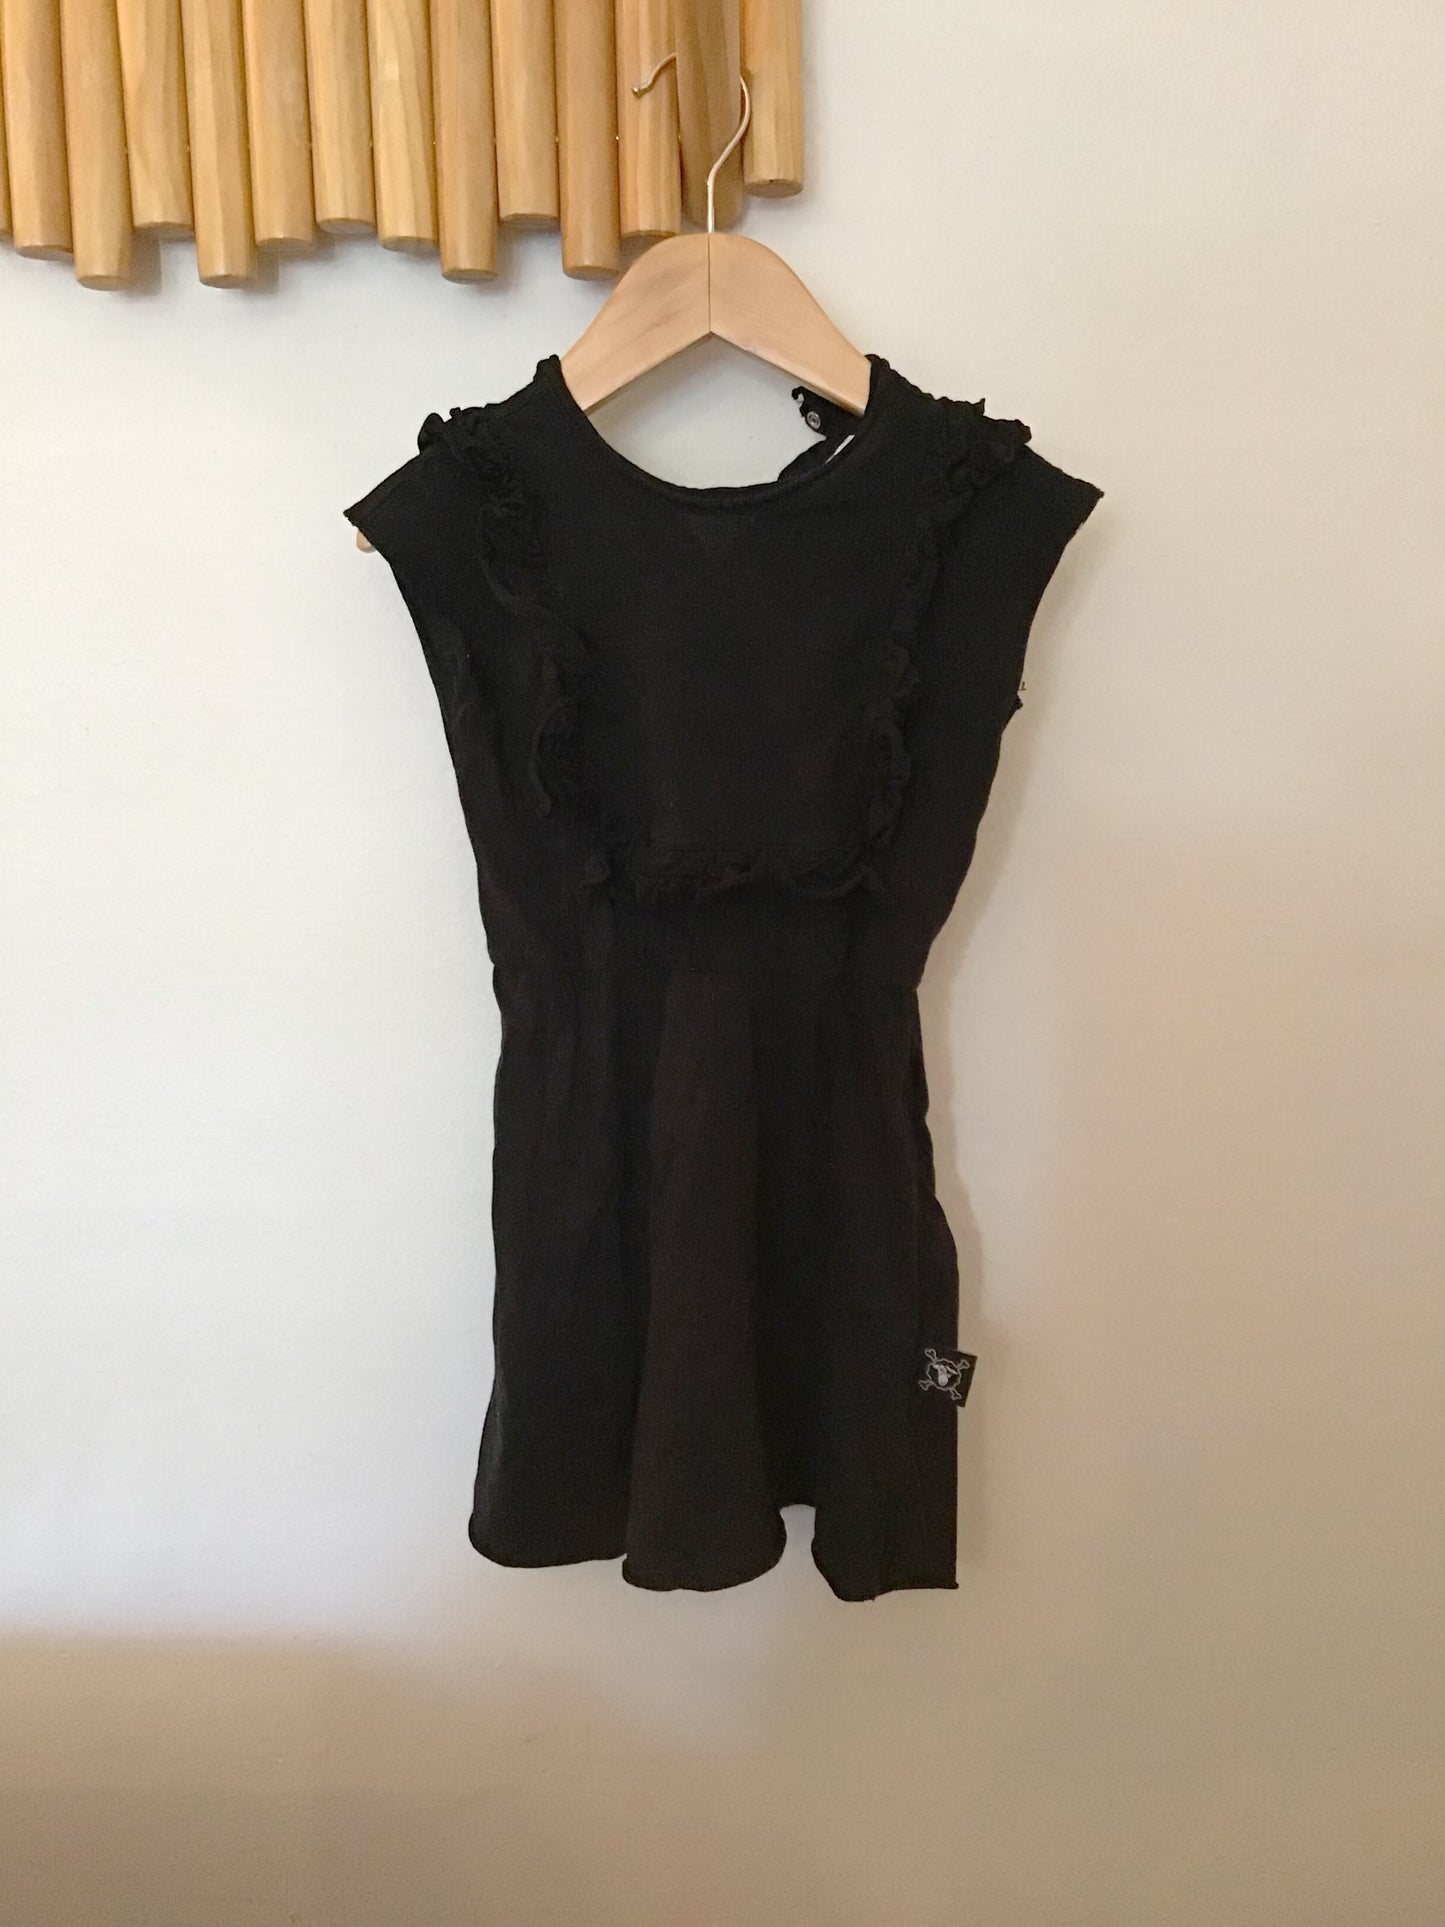 Nununu black dress 18-24m